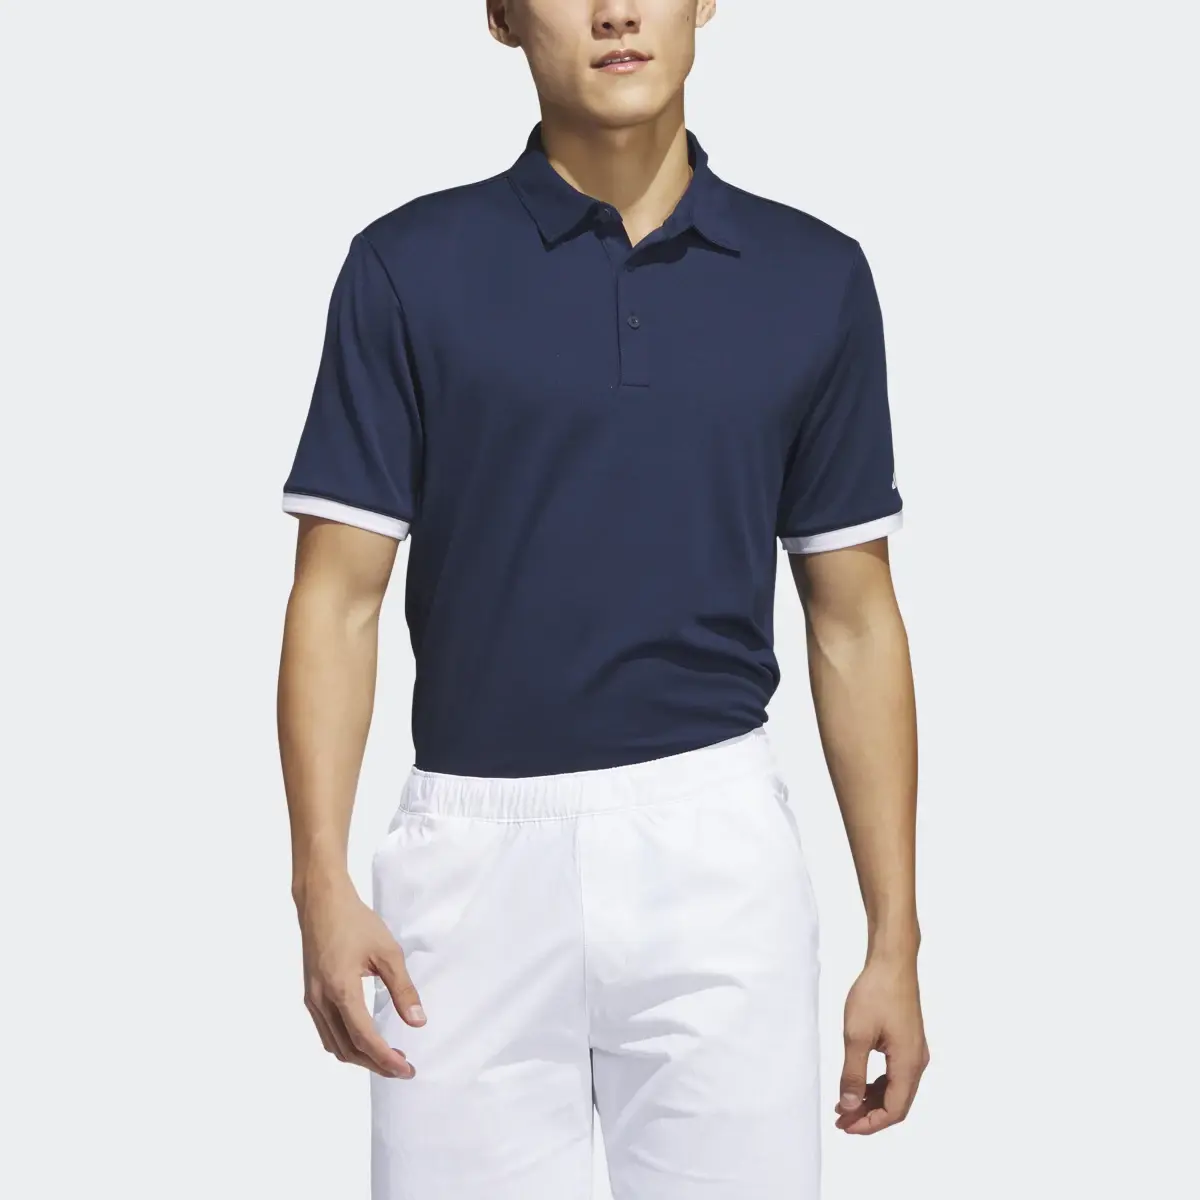 Adidas HEAT.RDY Polo Shirt. 1